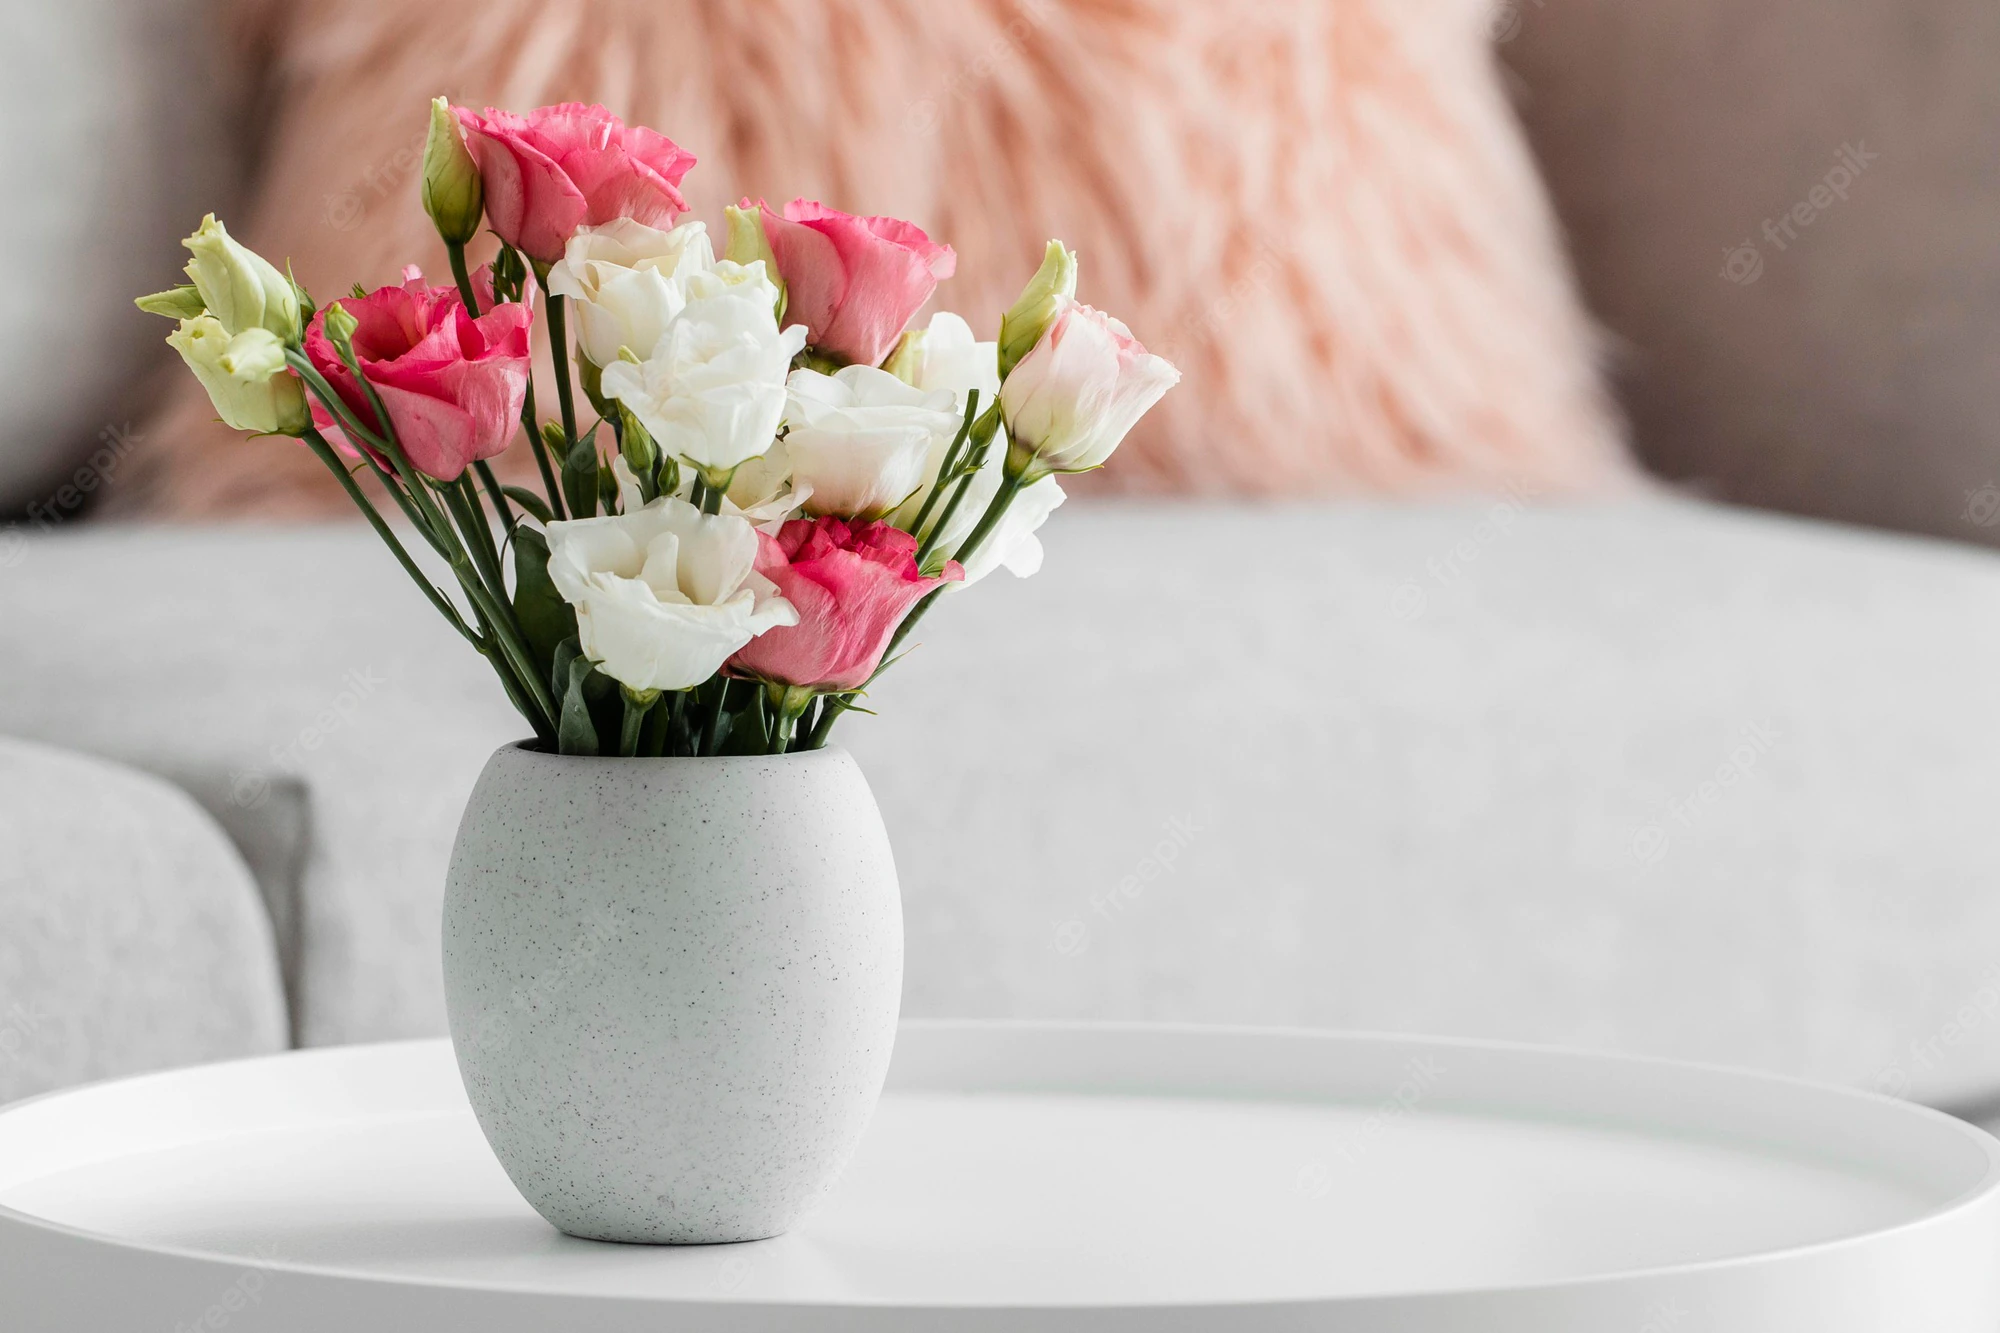 How to order a flower vase online in Dubai UAE?